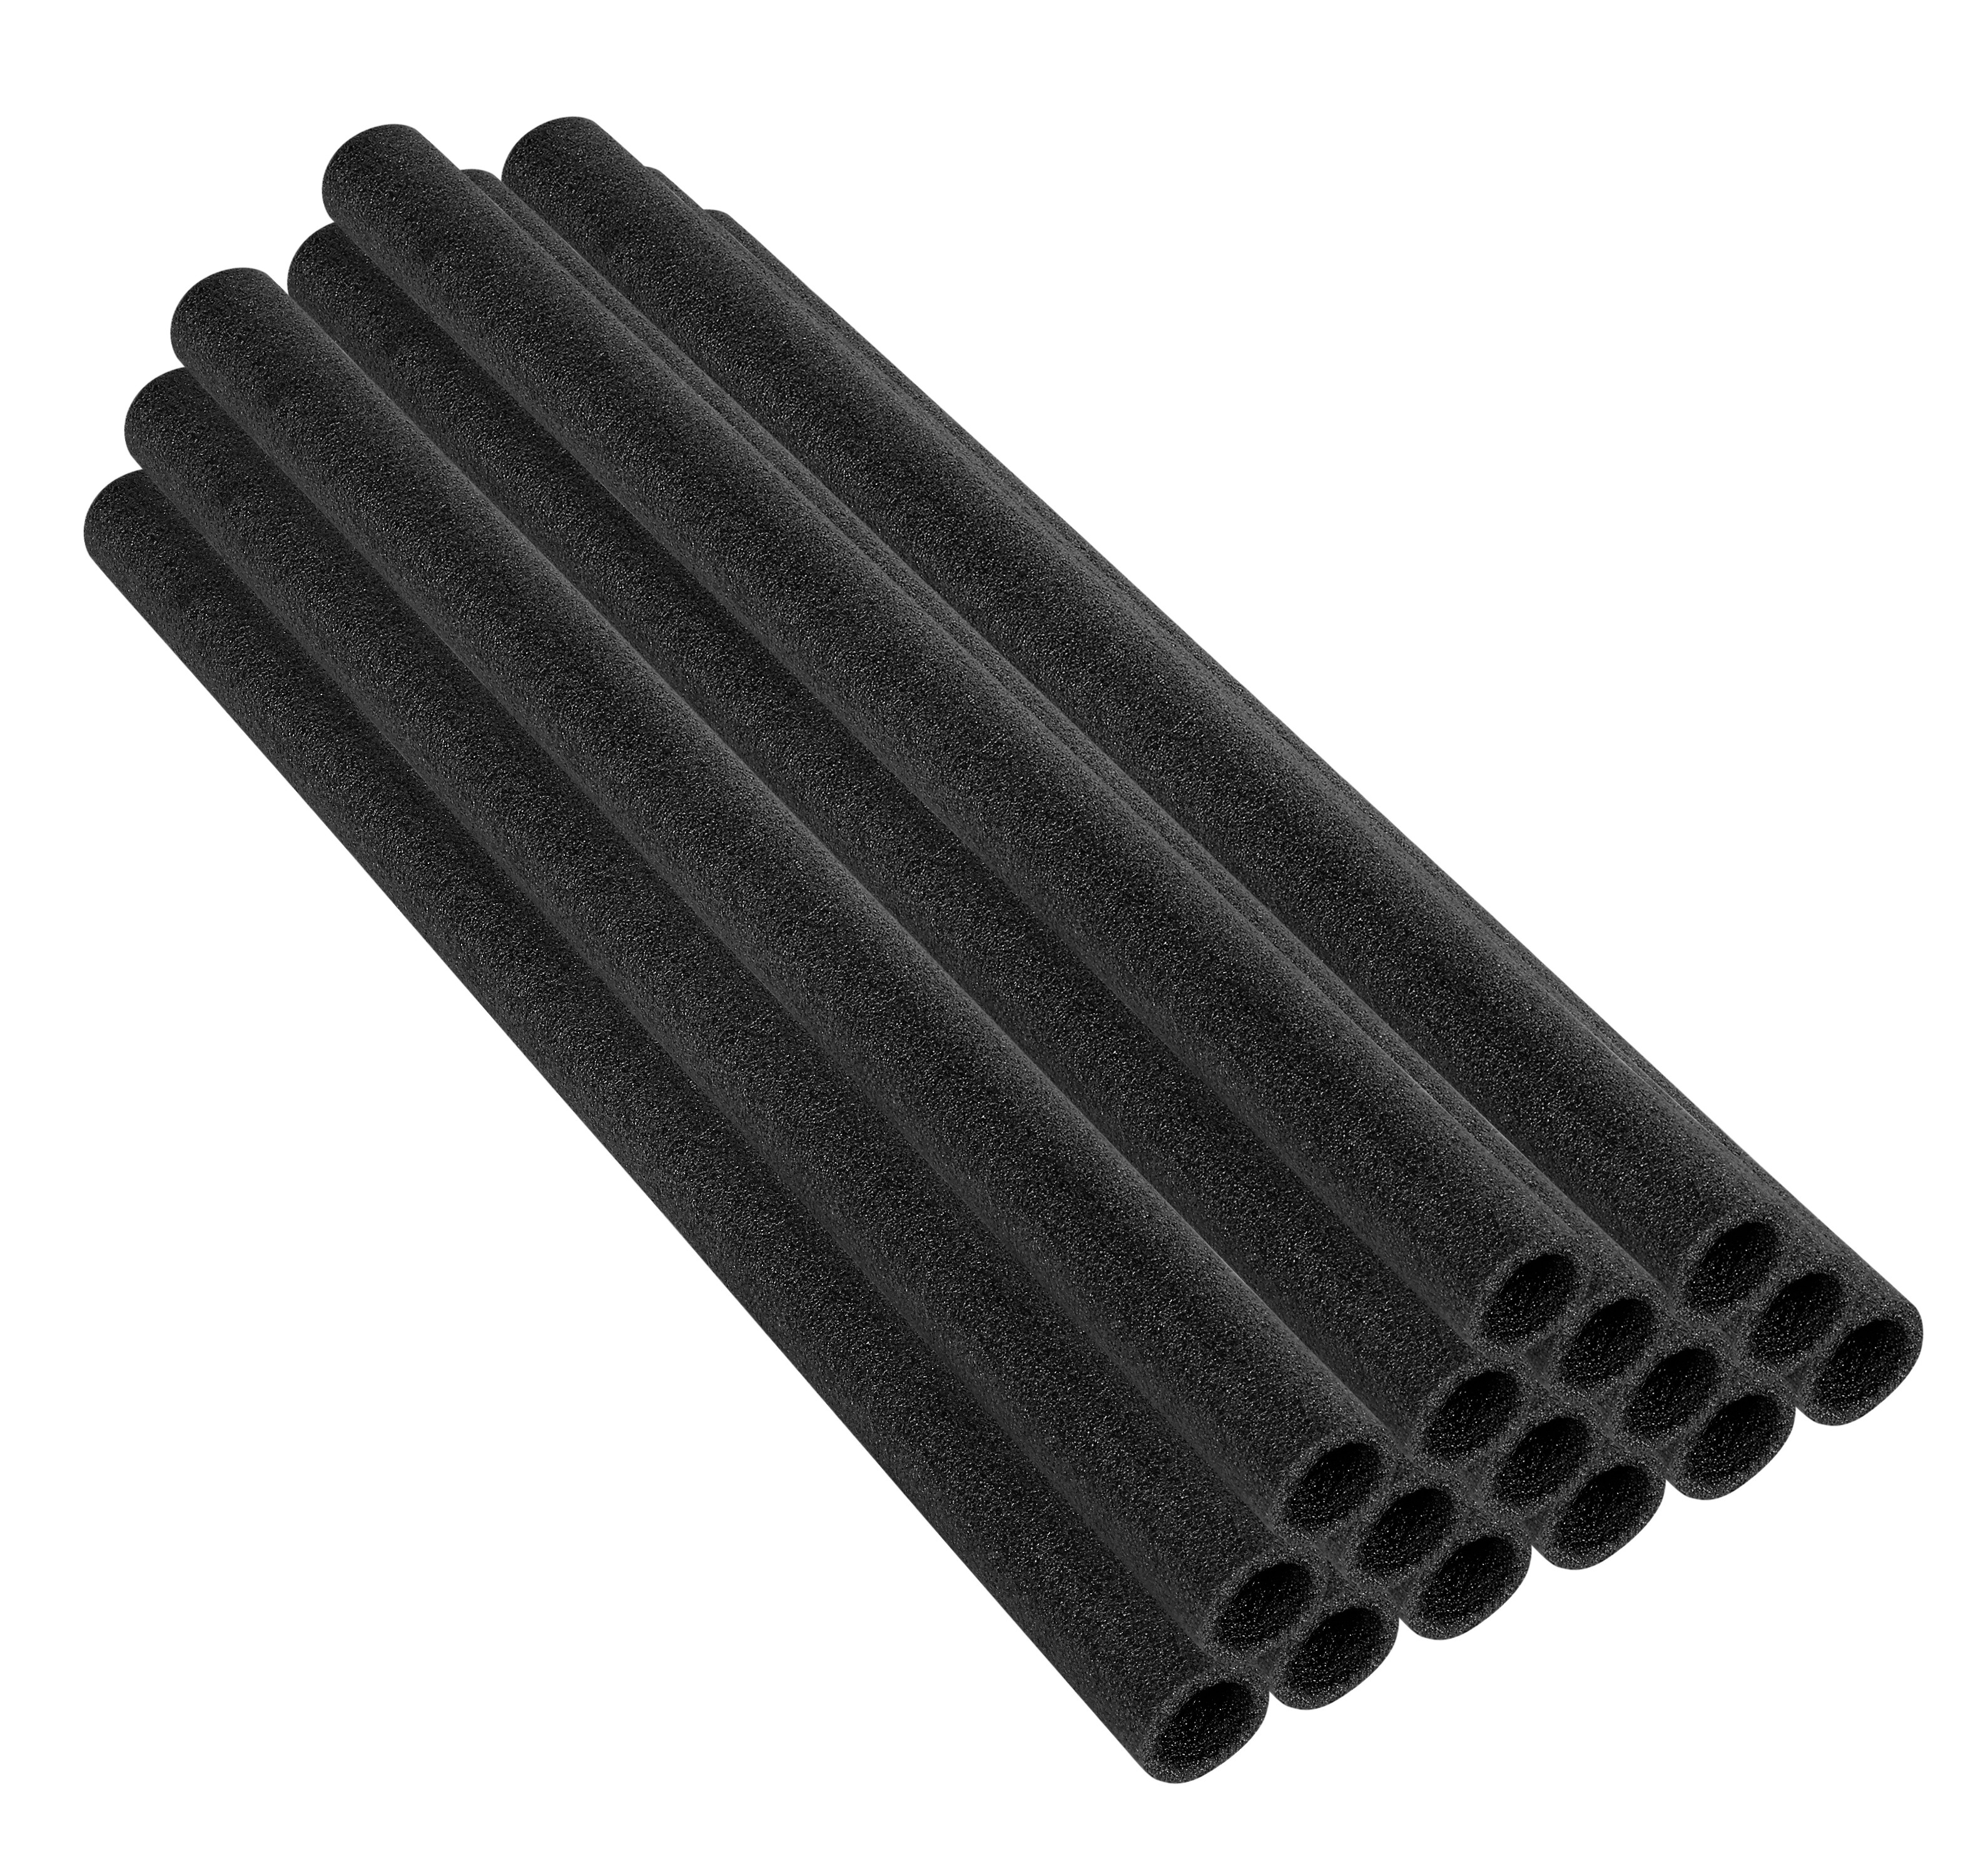 33 Inch 84cm Trampoline Foam Sleeves, 1.5" Diameter Pole | Replacement Sponge Padding for 8 Poles | Set of 16 - Black